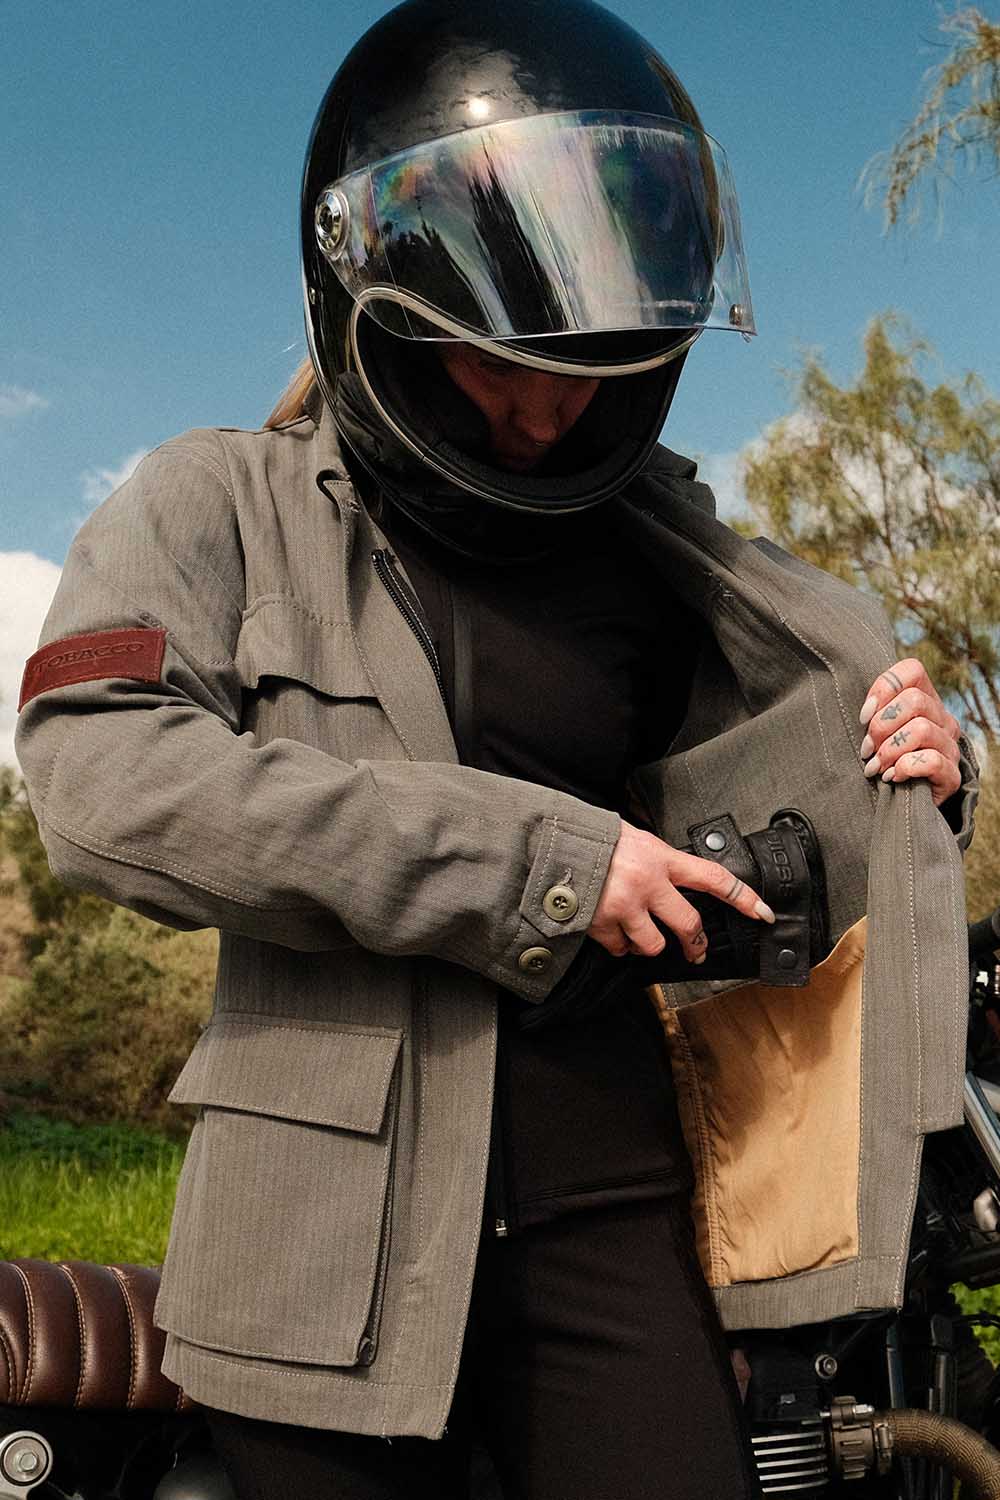 Tobacco Motorwear Shirts Women’s Motorcycle Protective Jacket - Kevlar Lined, Removable D3O Impact Armor Pockets, Medium